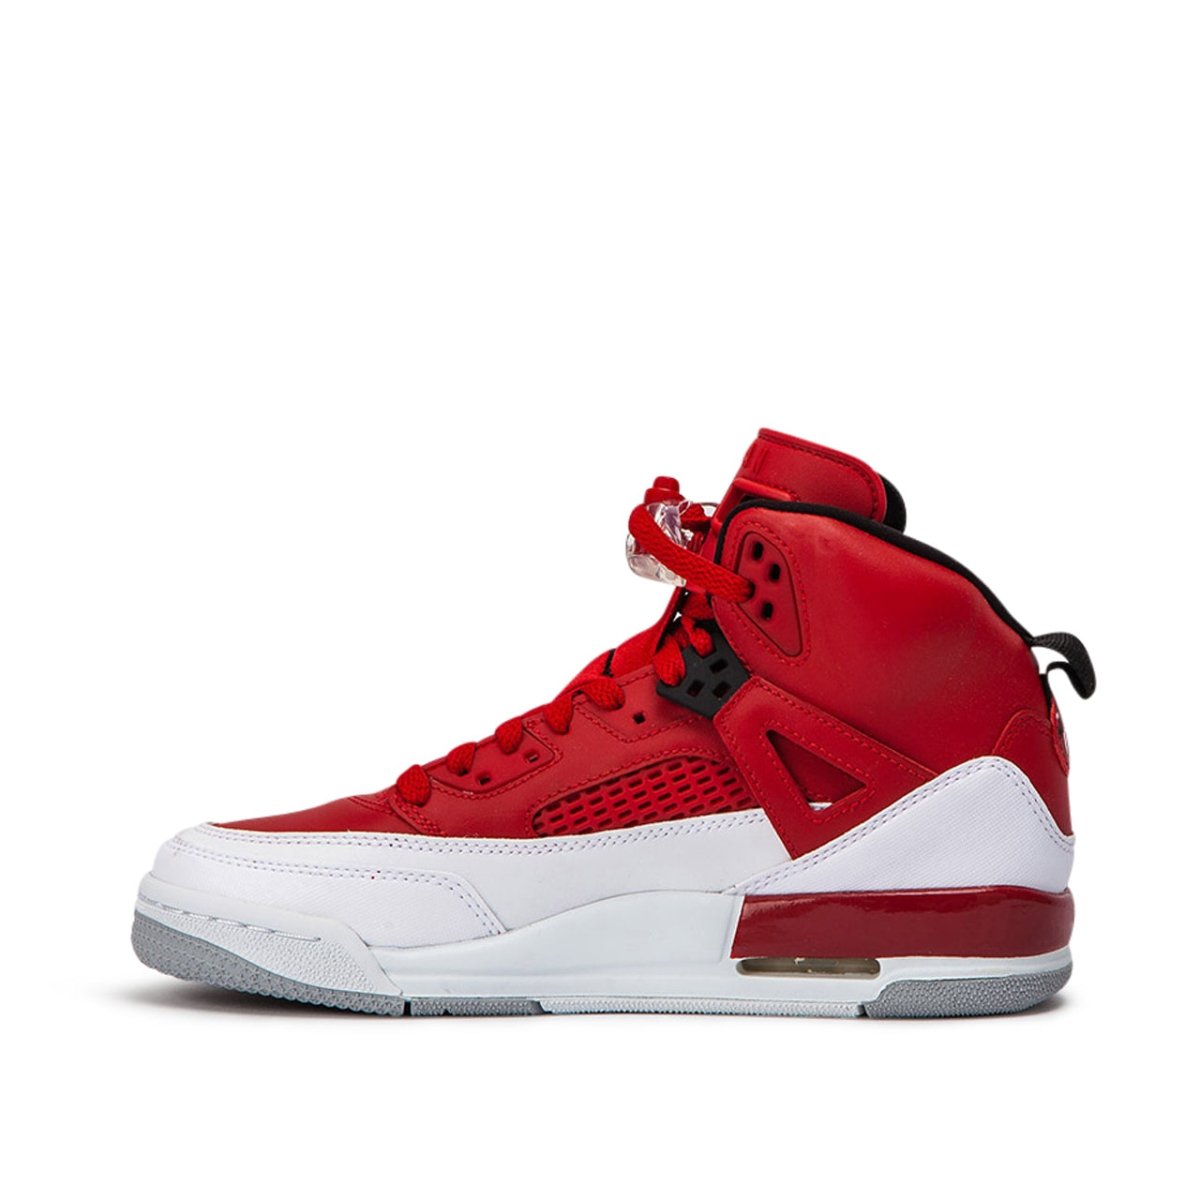 Nike Air Jordan Spizike BG (Red White) 317321-603 –